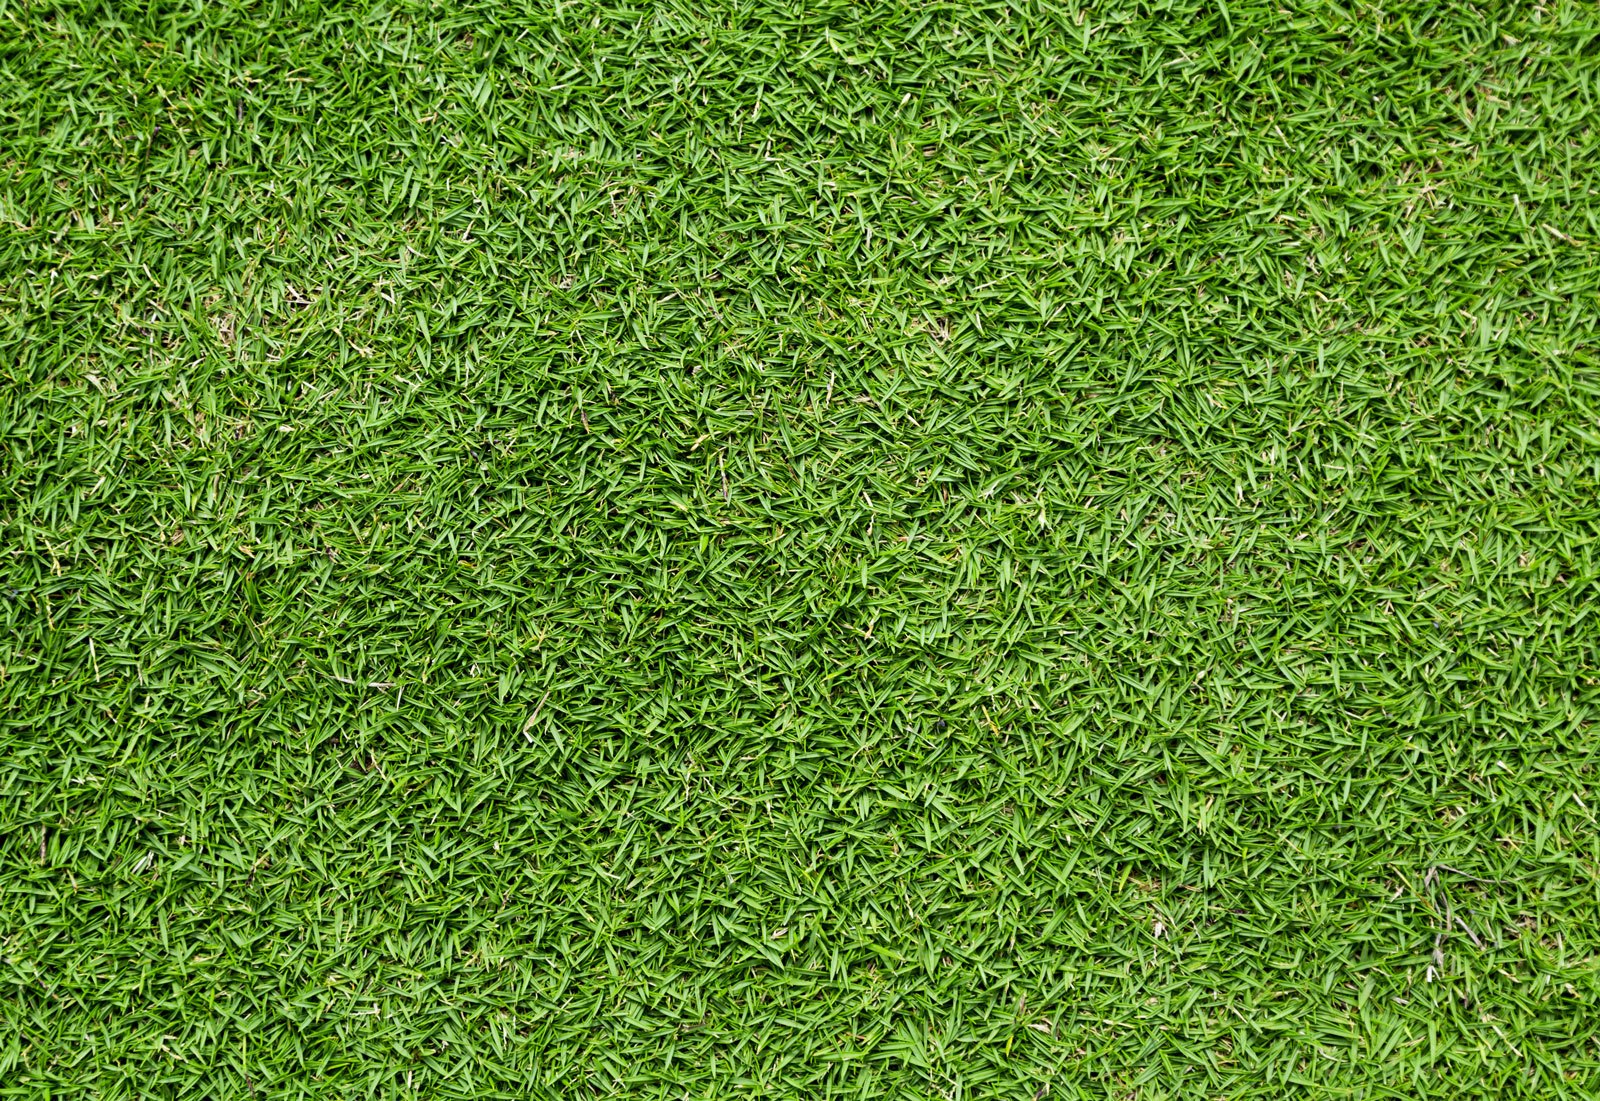 Tifway 419 Bermuda Grass: Maintenance and Uses